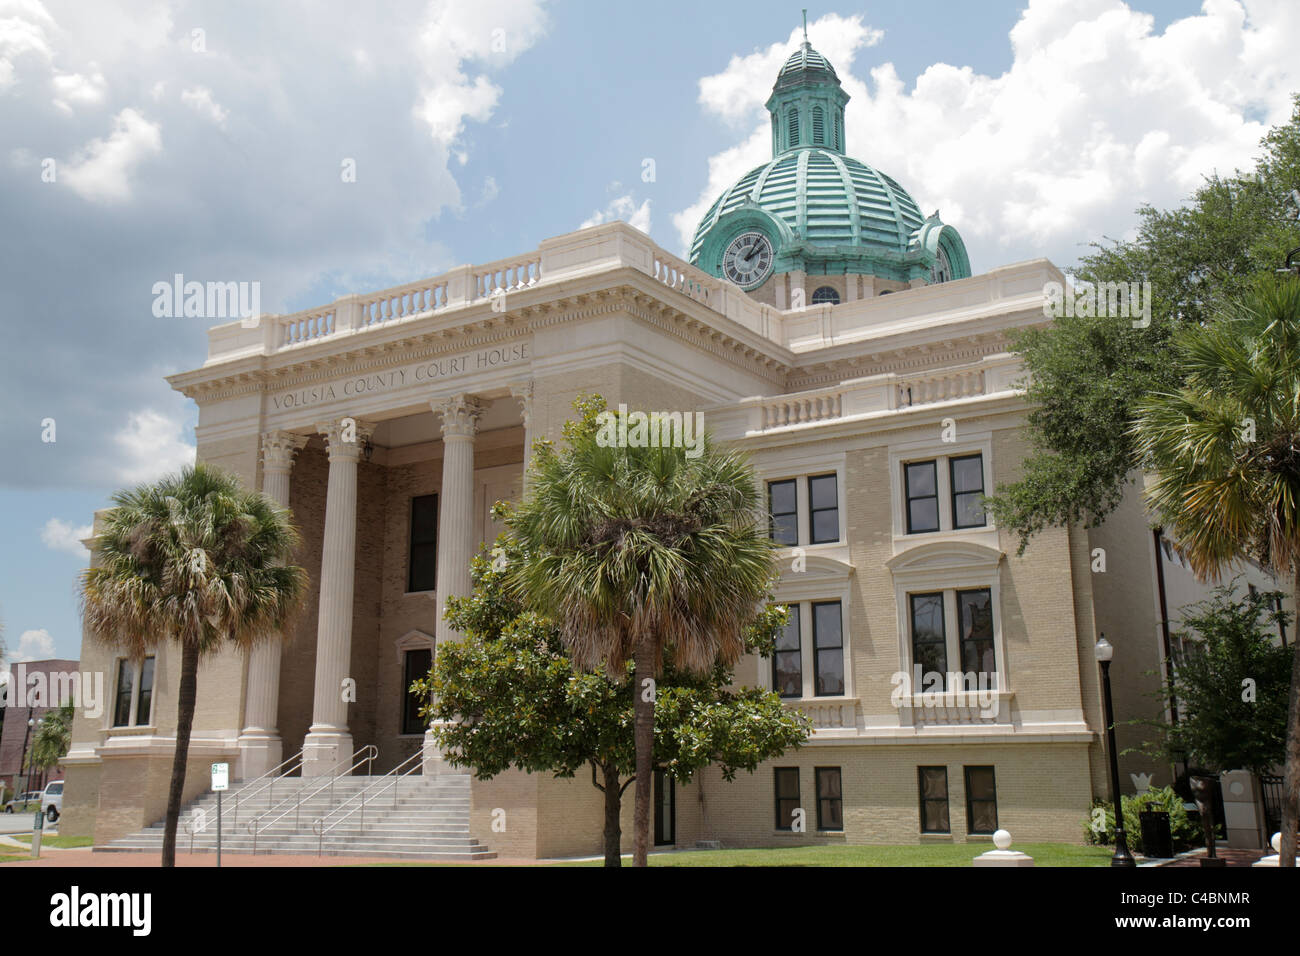 Florida Deland Volusia County Court House courthouse historic Stock